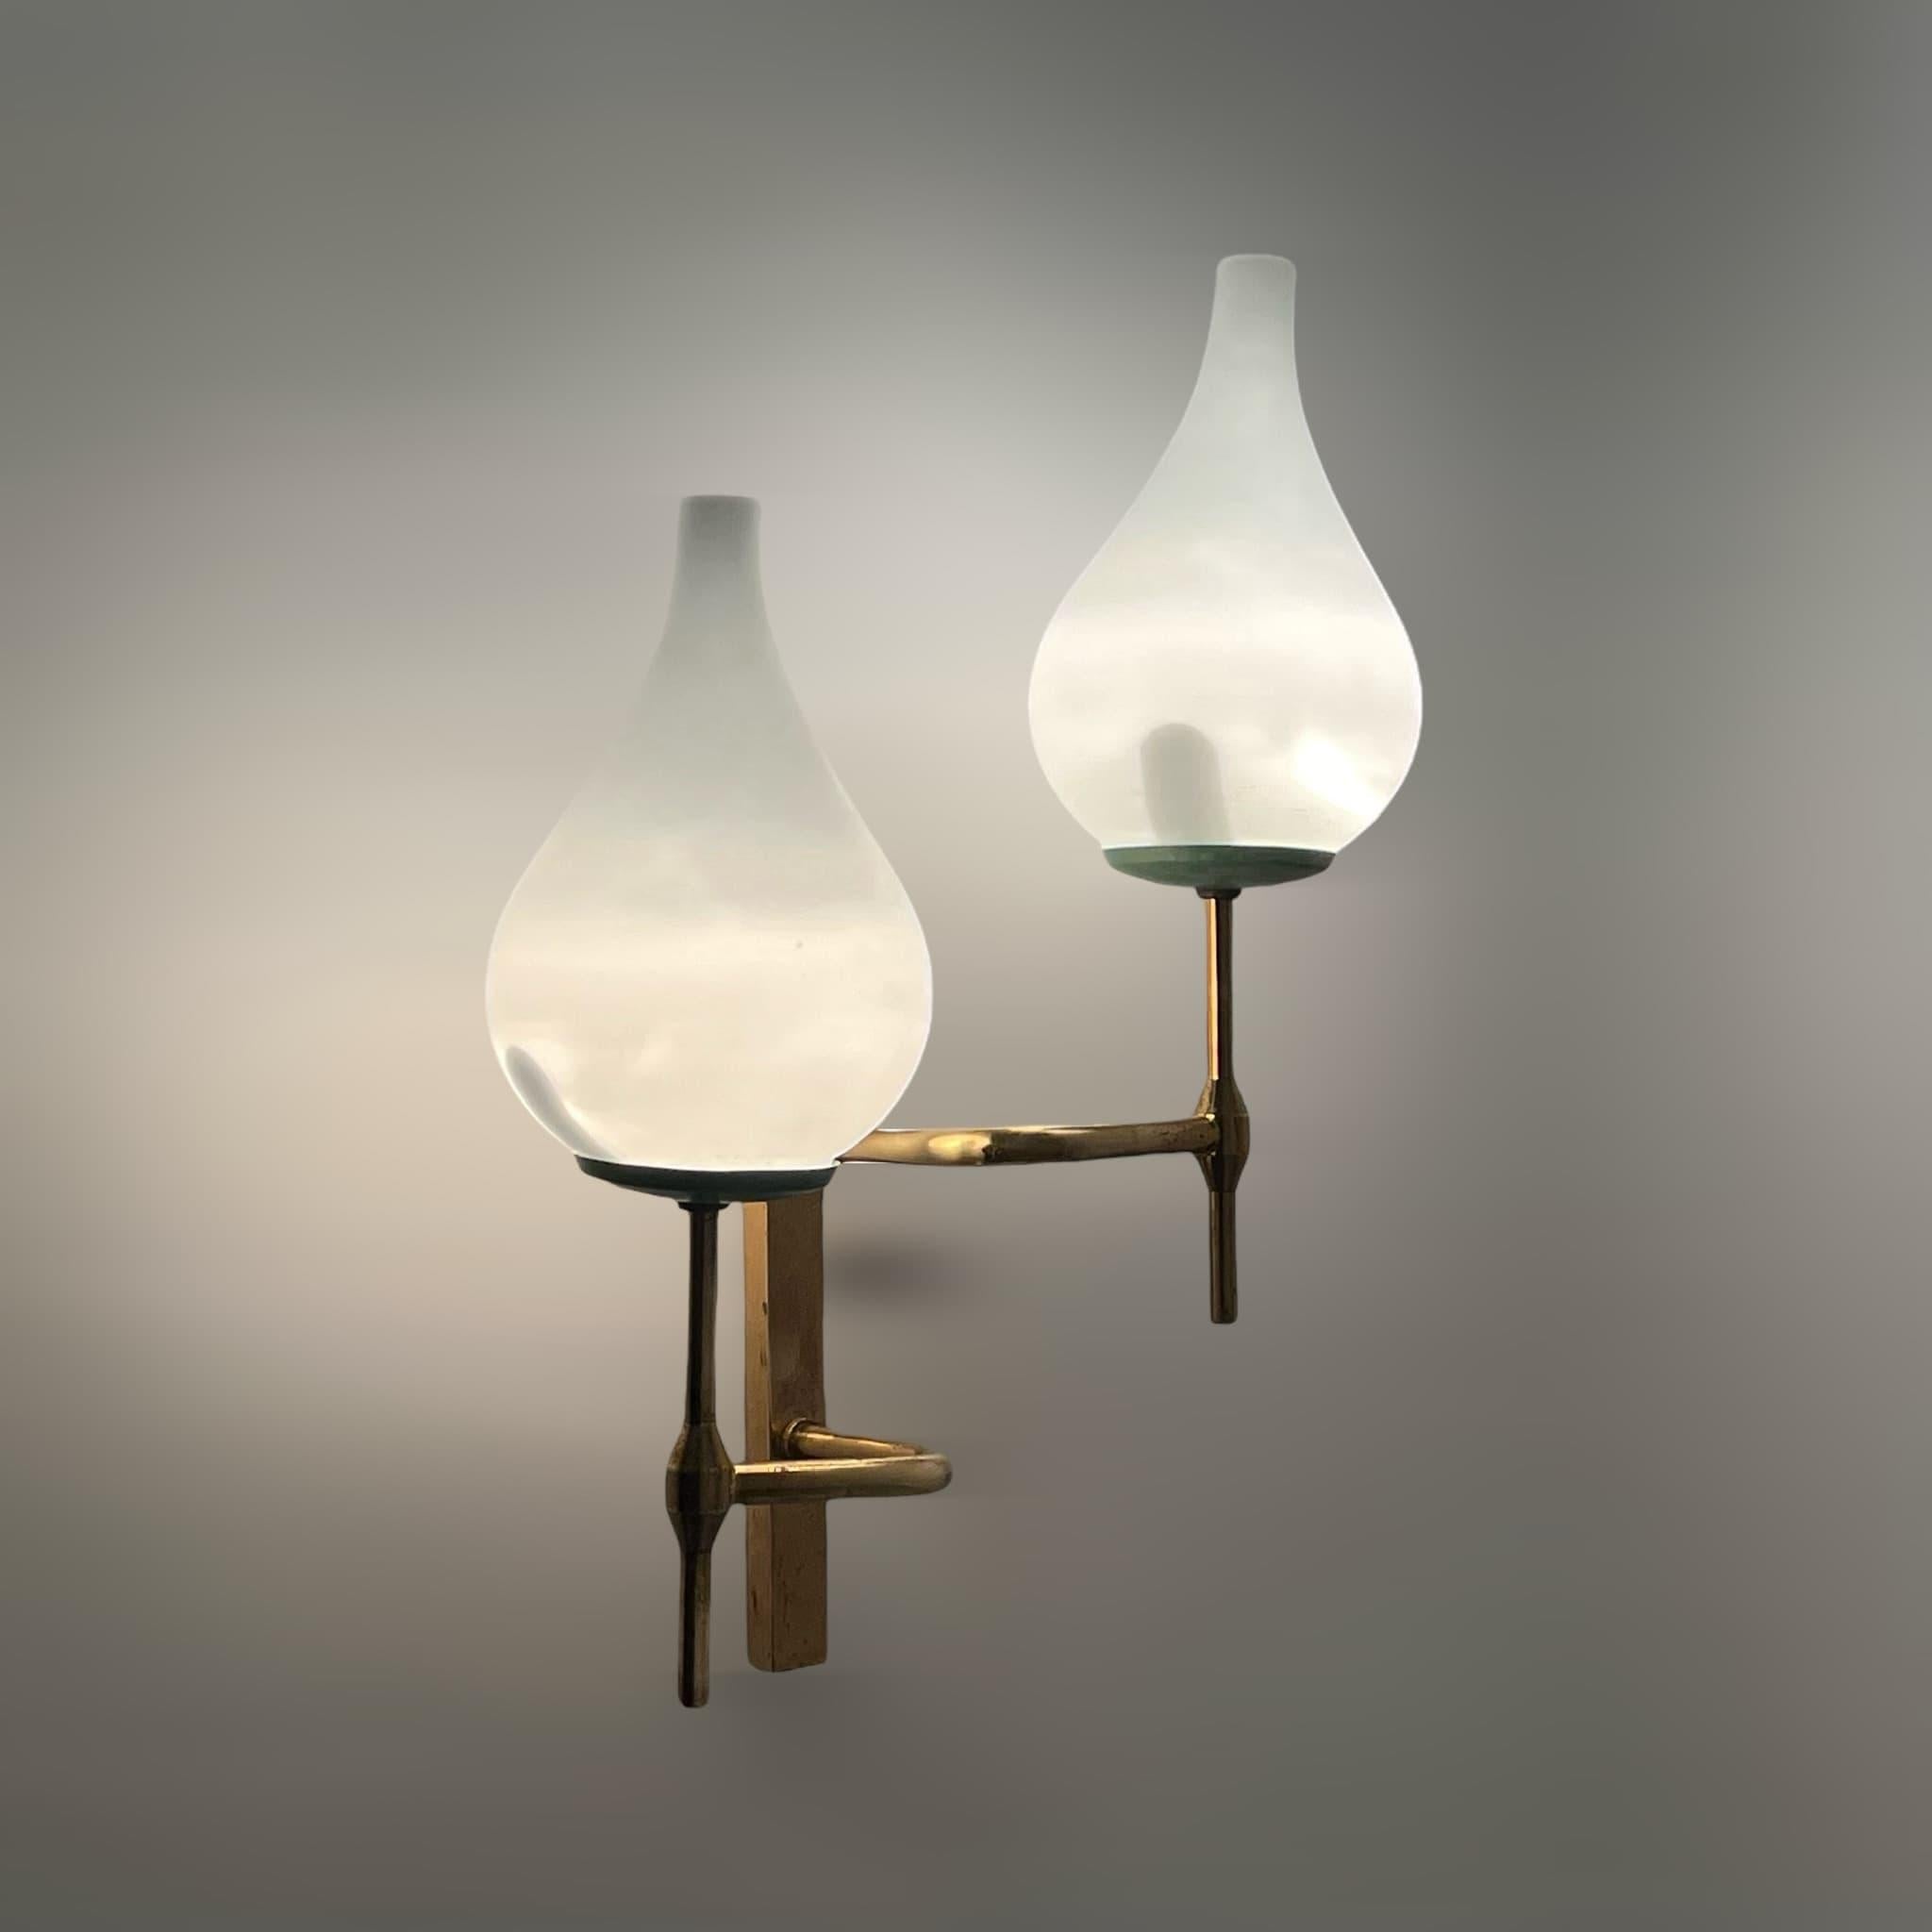 Elegant 50s Lamp Stilnovo style – Vintage Italian Brass and Opaline Glass Sconce For Sale 4